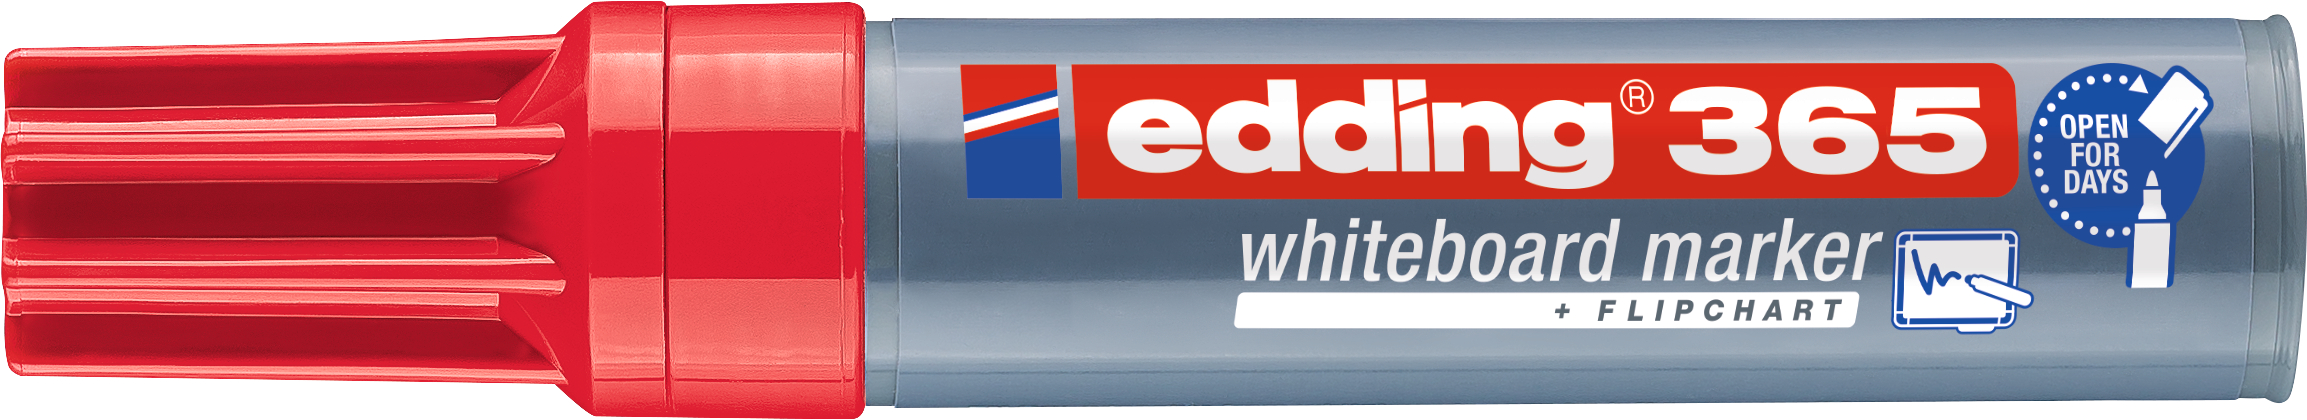 EDDING Whiteboard Marker 365 2-7mm 365-002 rouge rouge